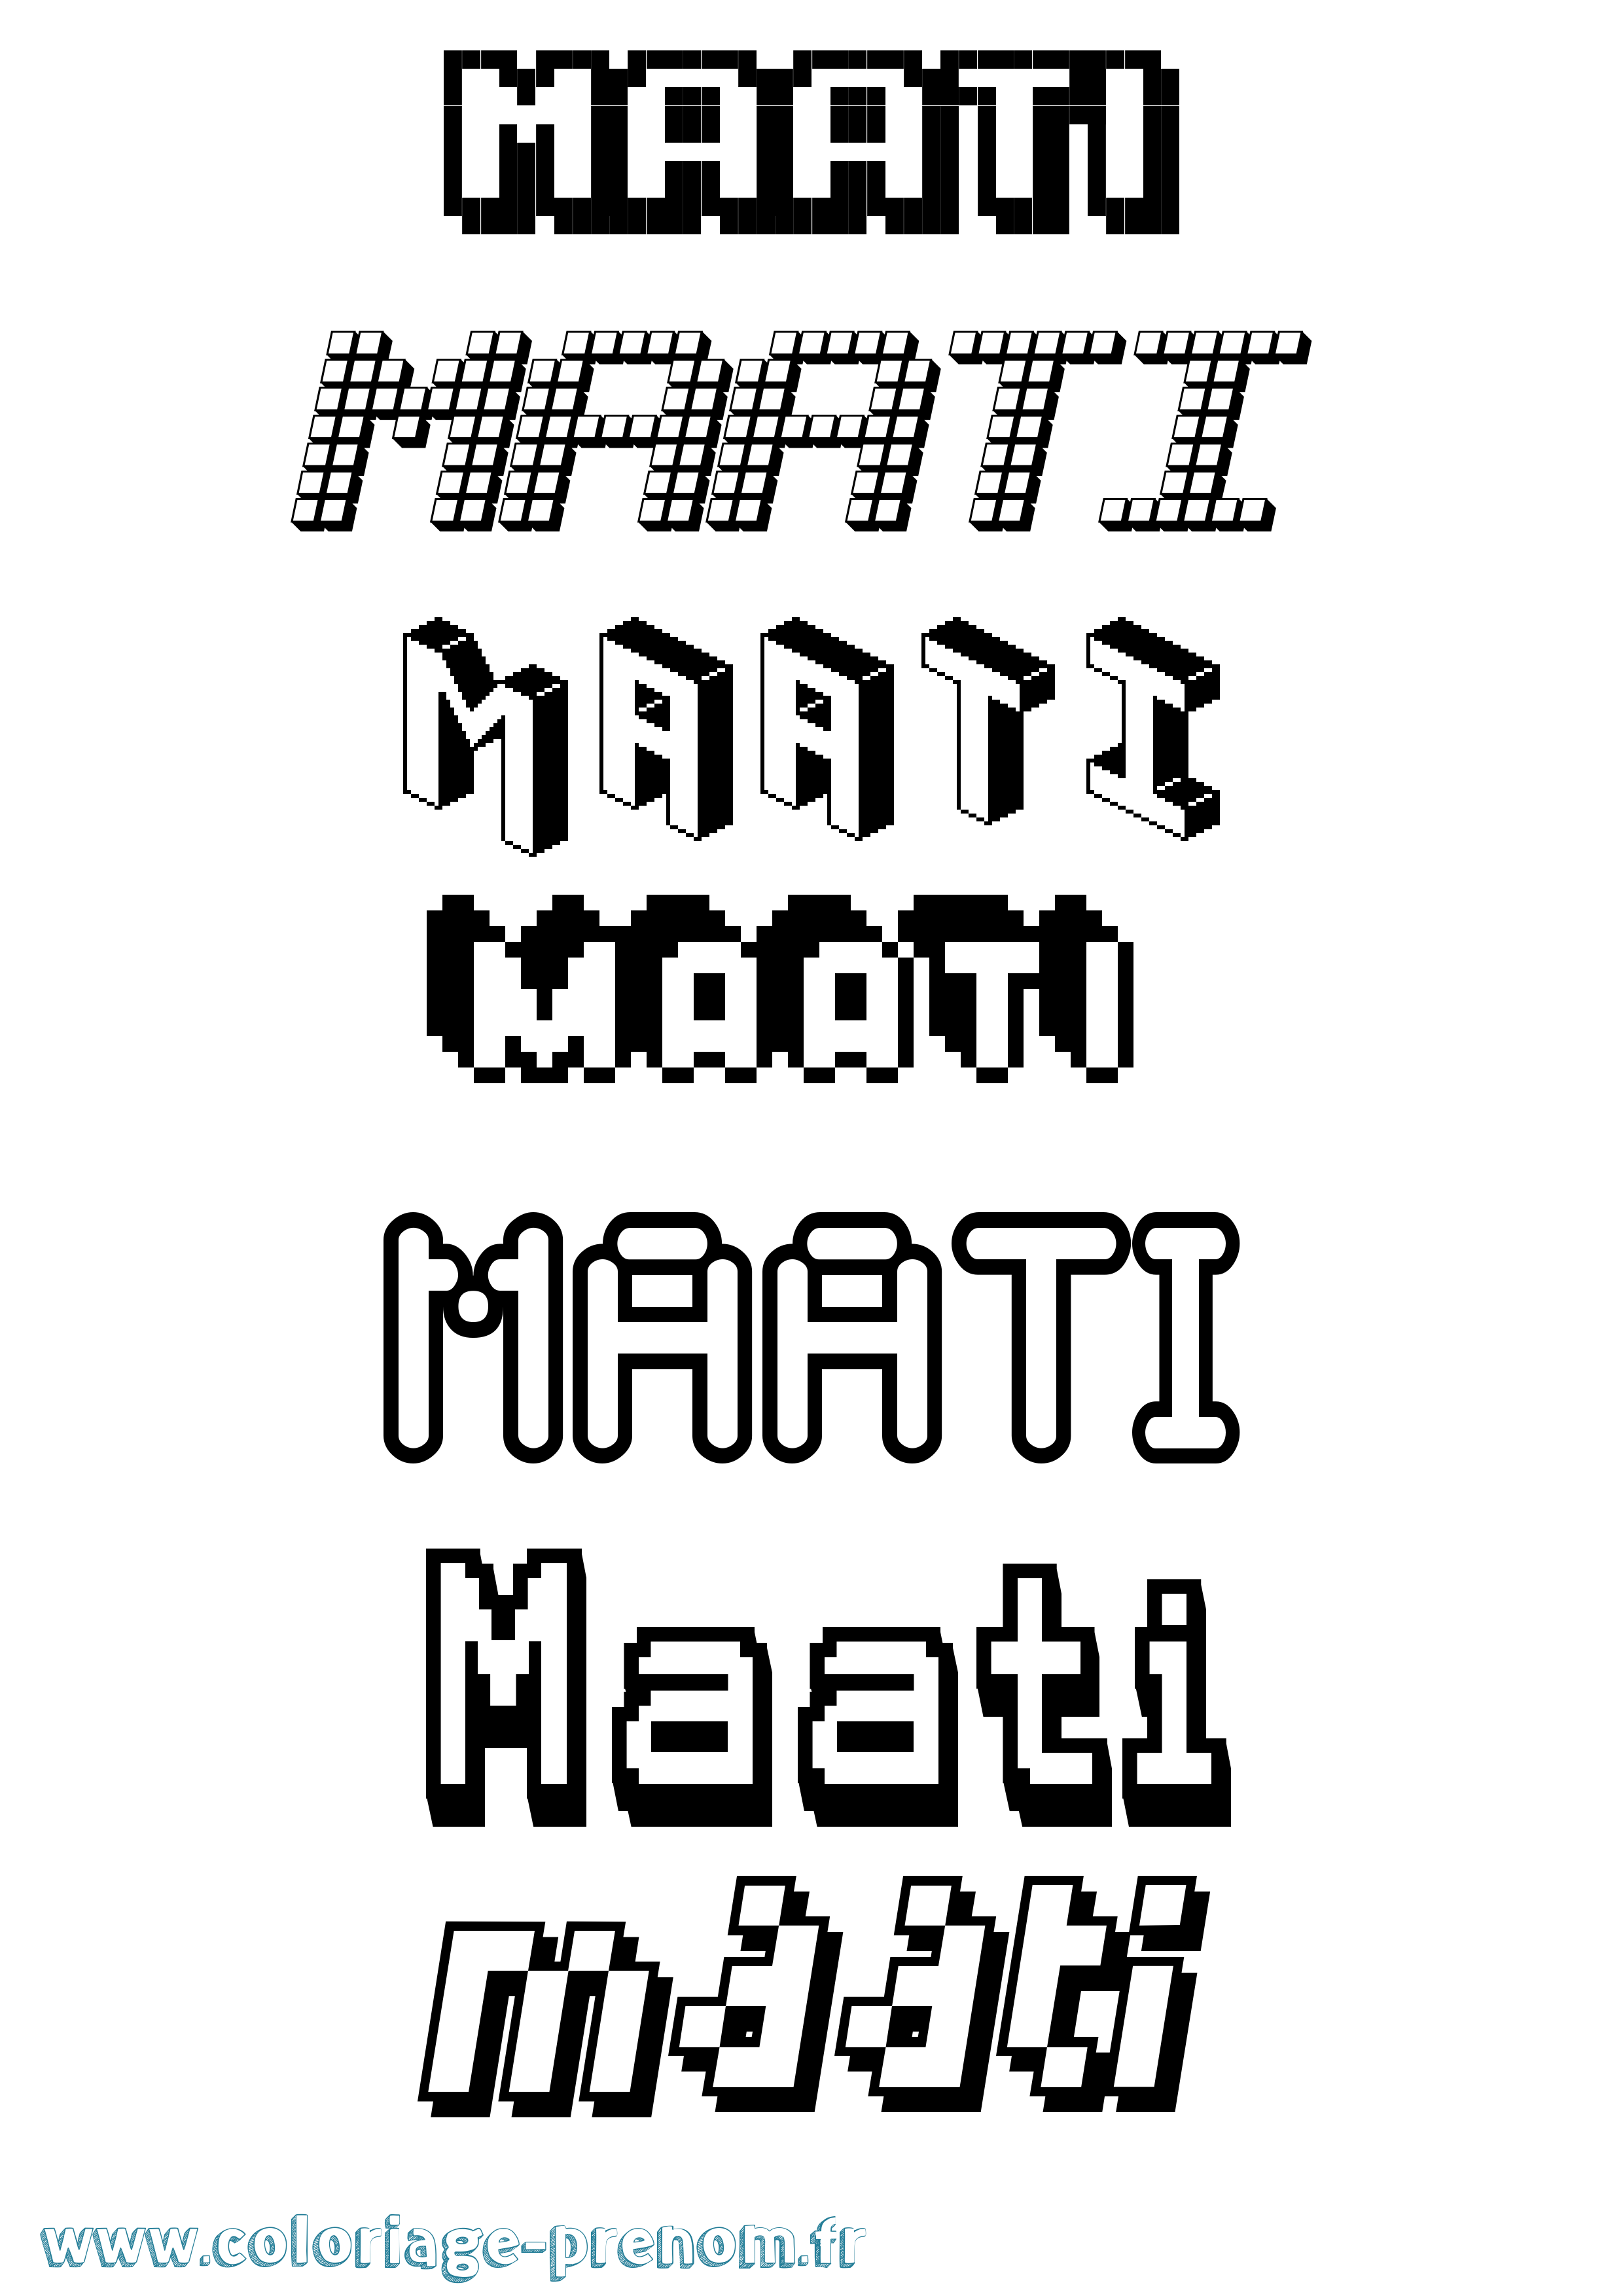 Coloriage prénom Maati Pixel